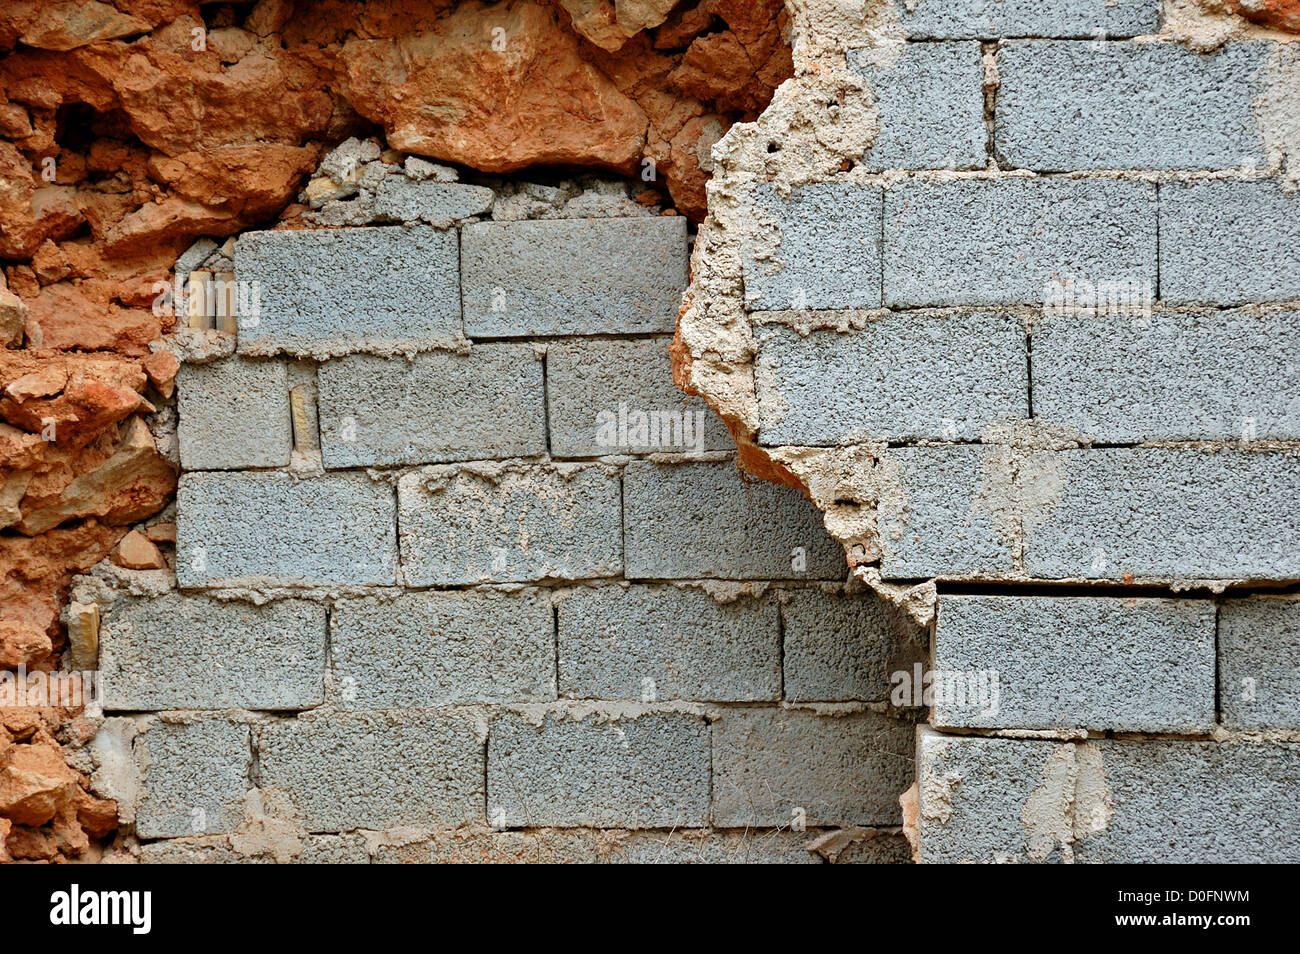 Broken stone and cinder block brick walls background texture. Stock Photo